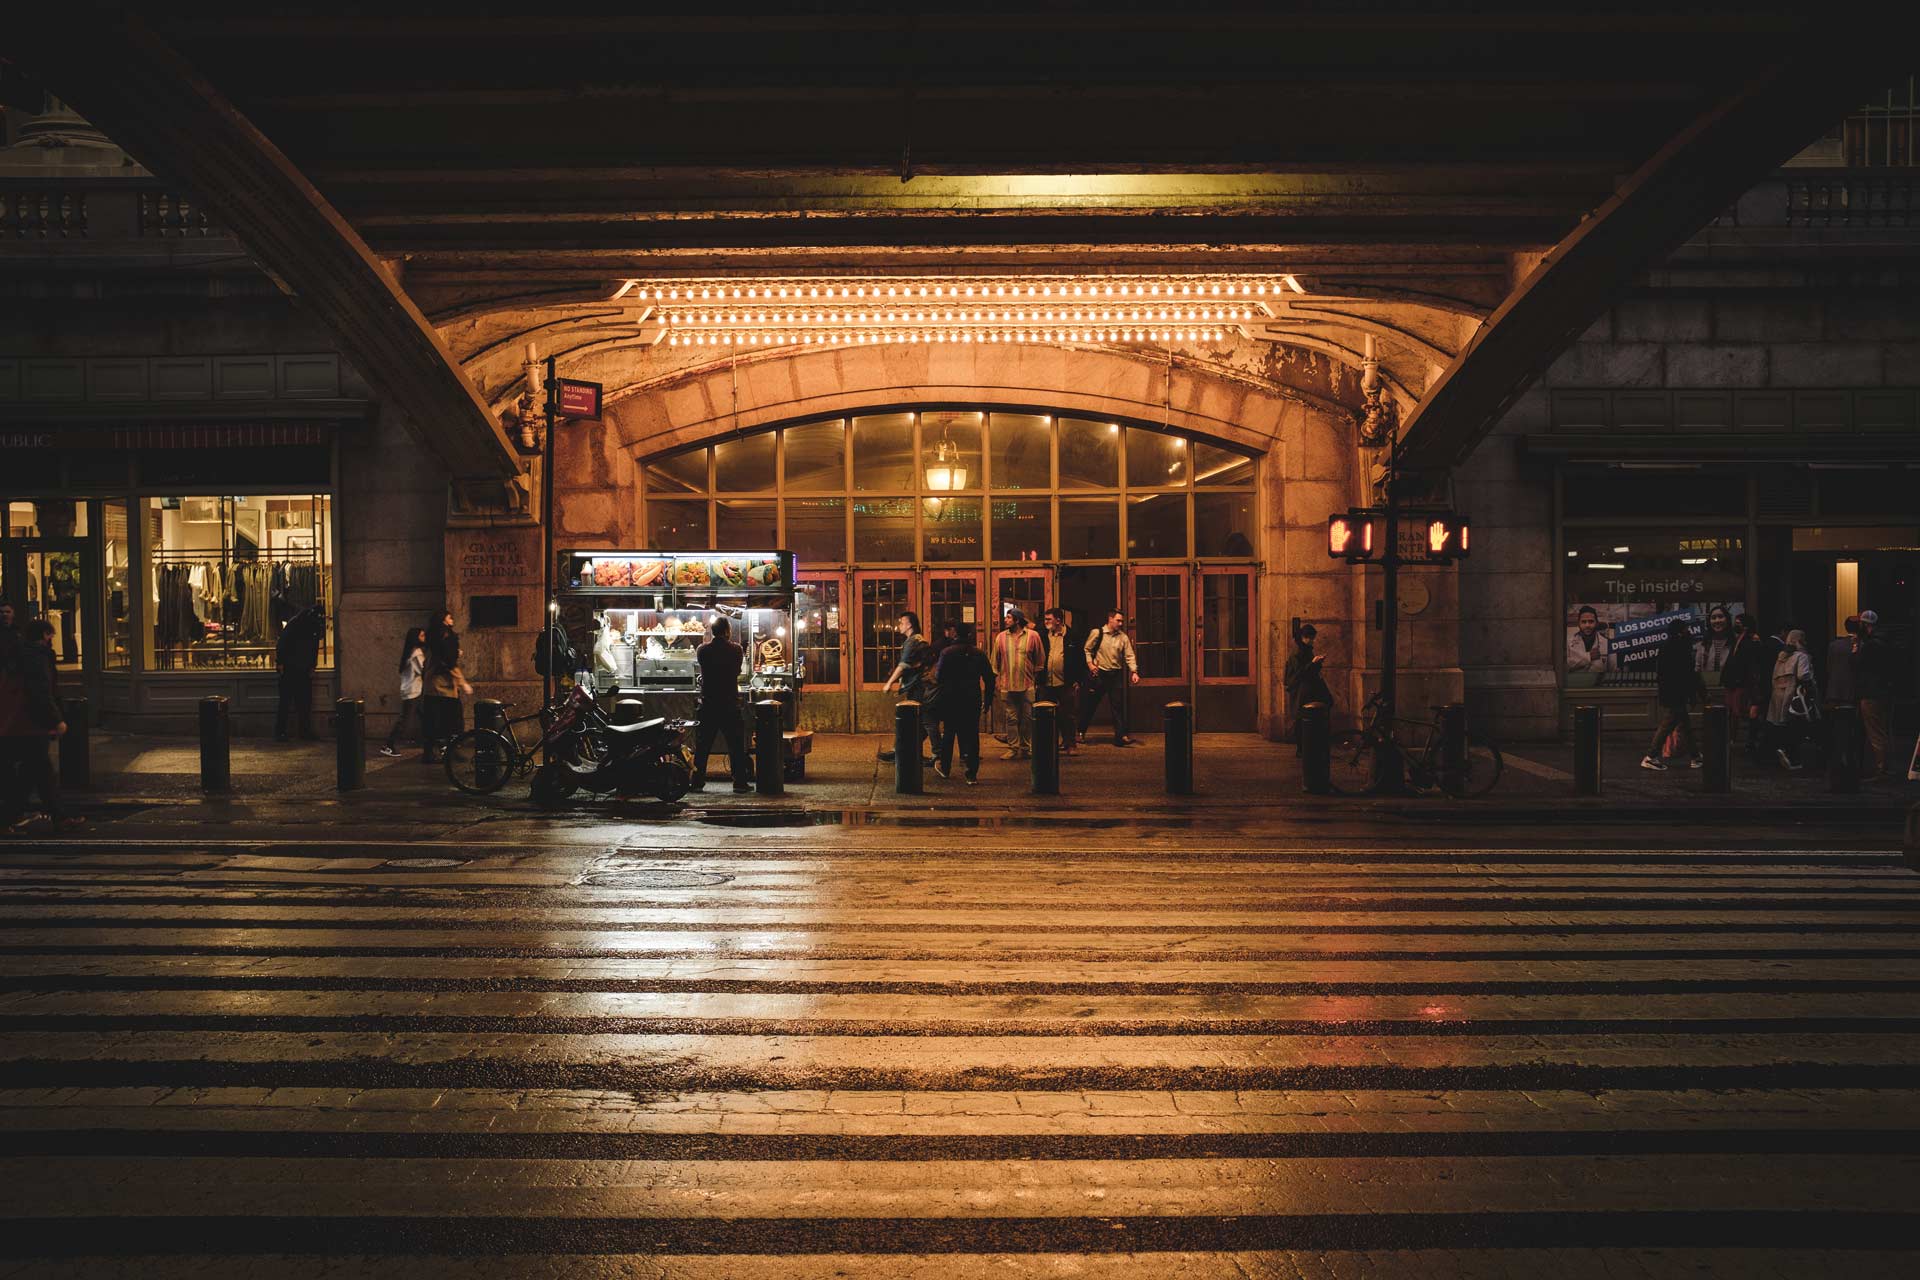 Grand-Central-Station-New-York-City-night